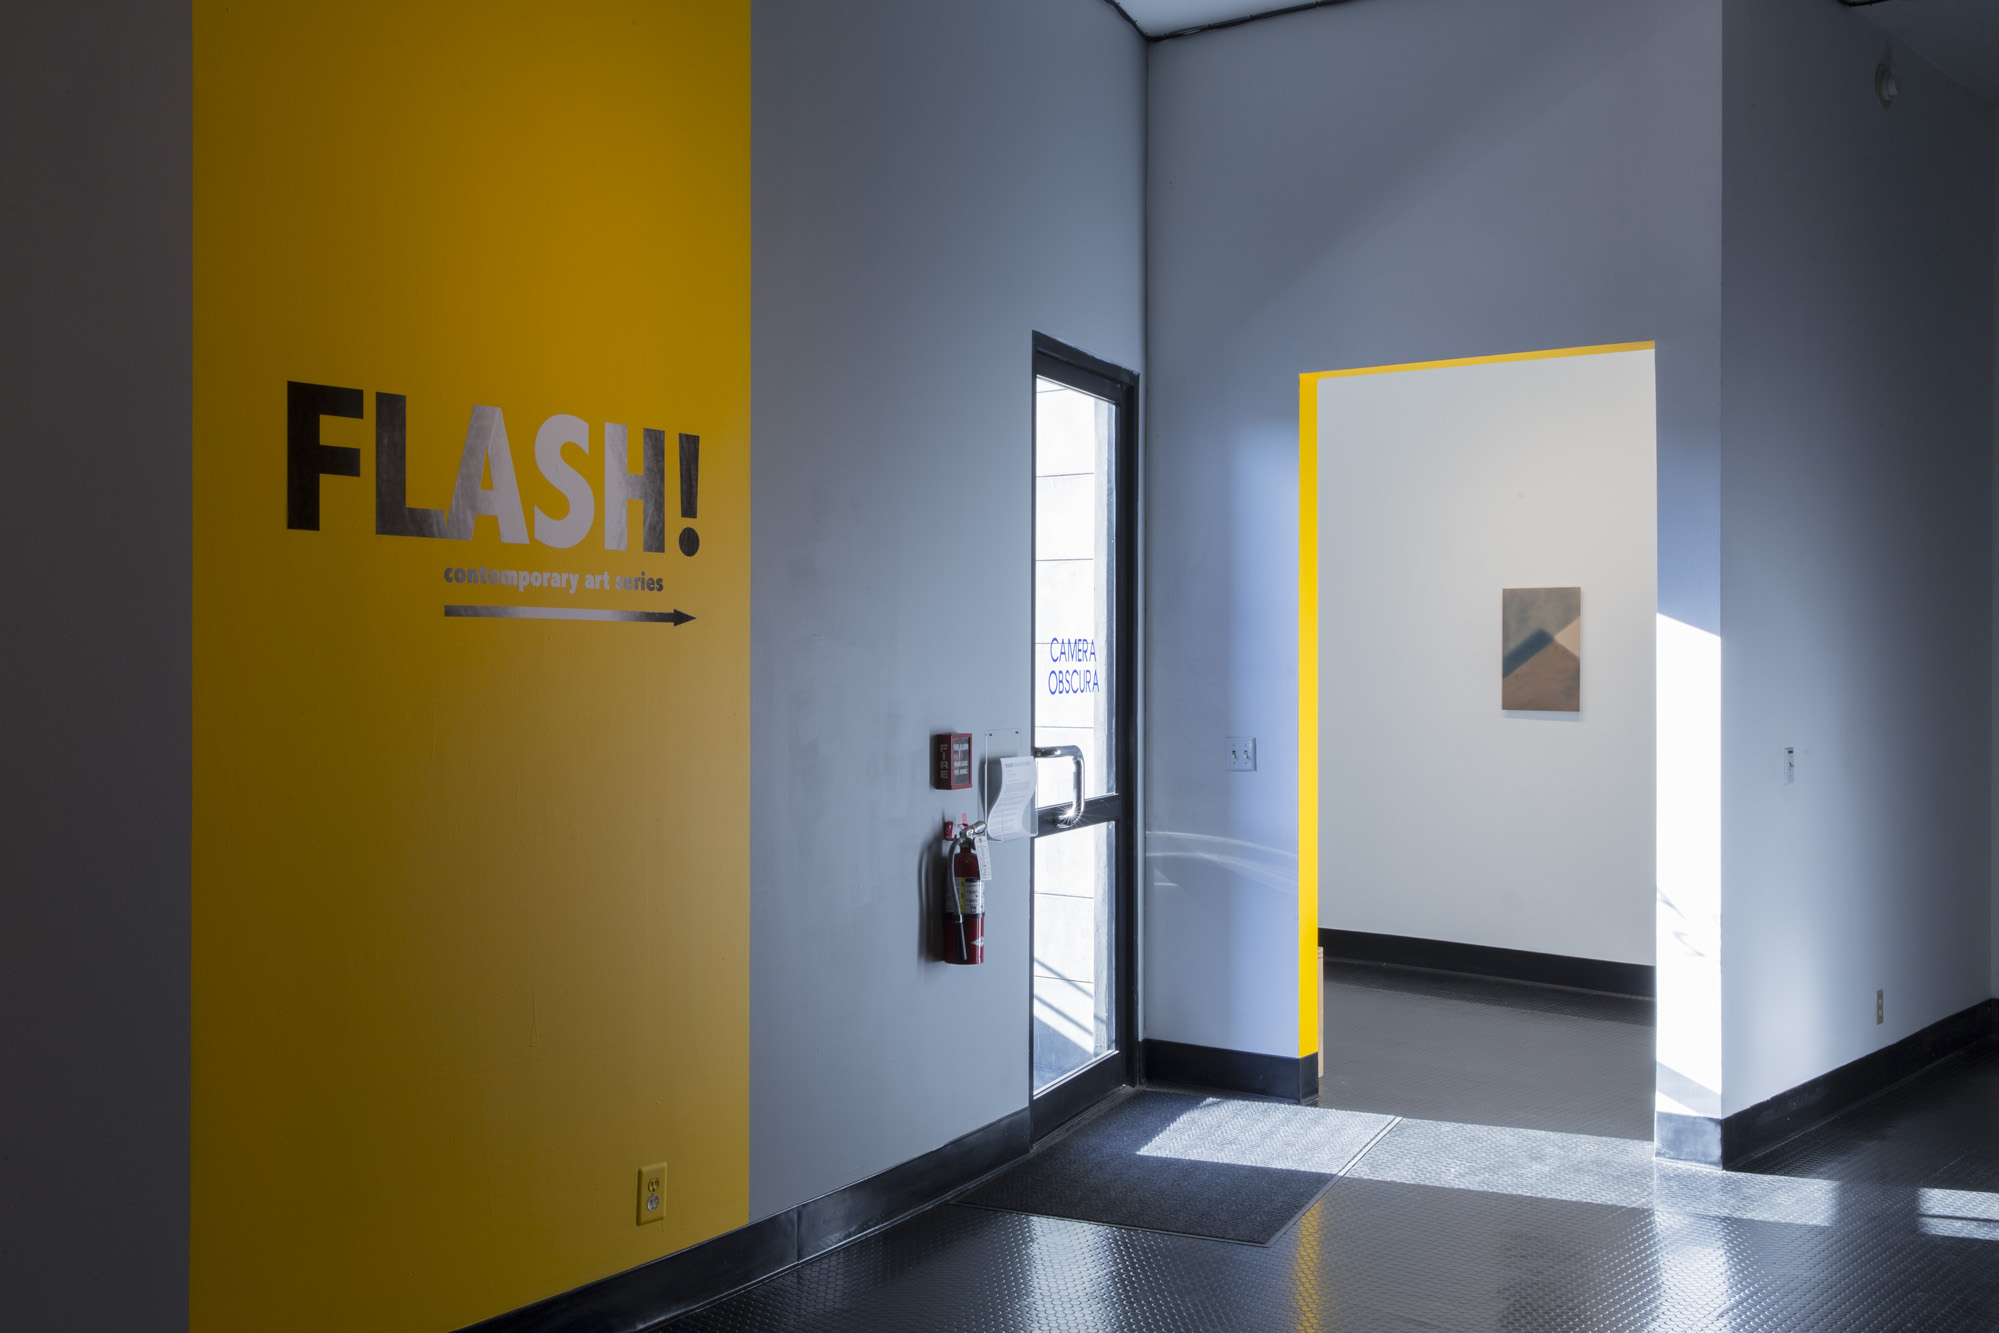 FLASH! contemporary art series